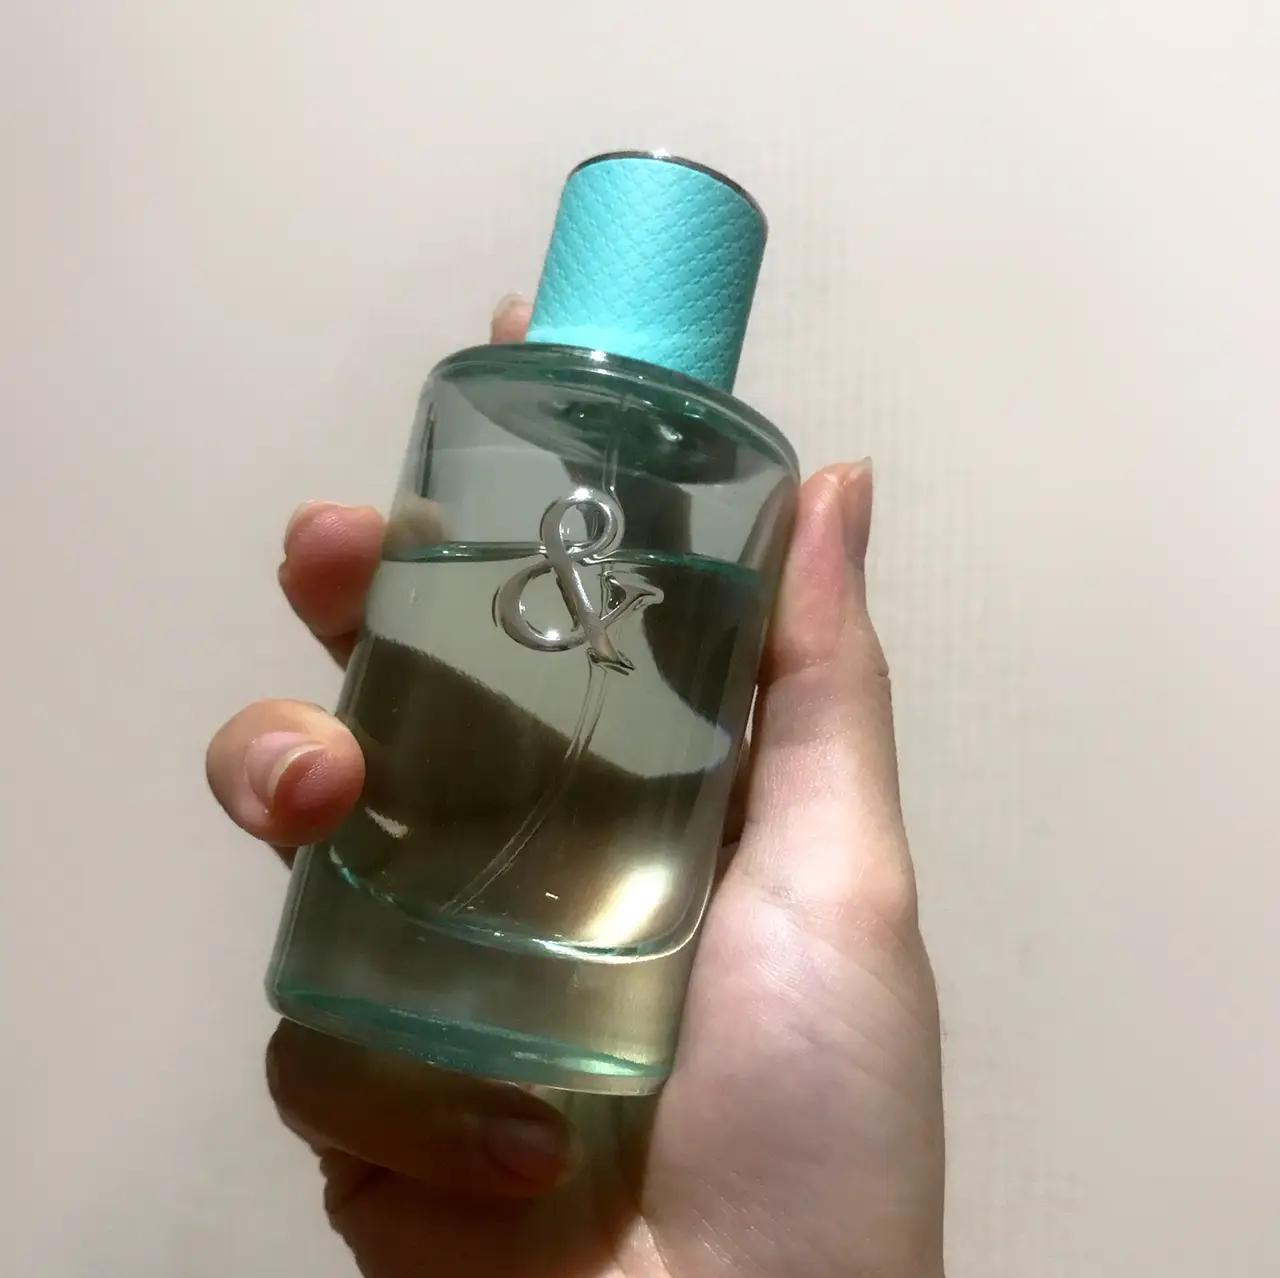  Tiffany & Co. Love Eau De Parfum Spray for Women